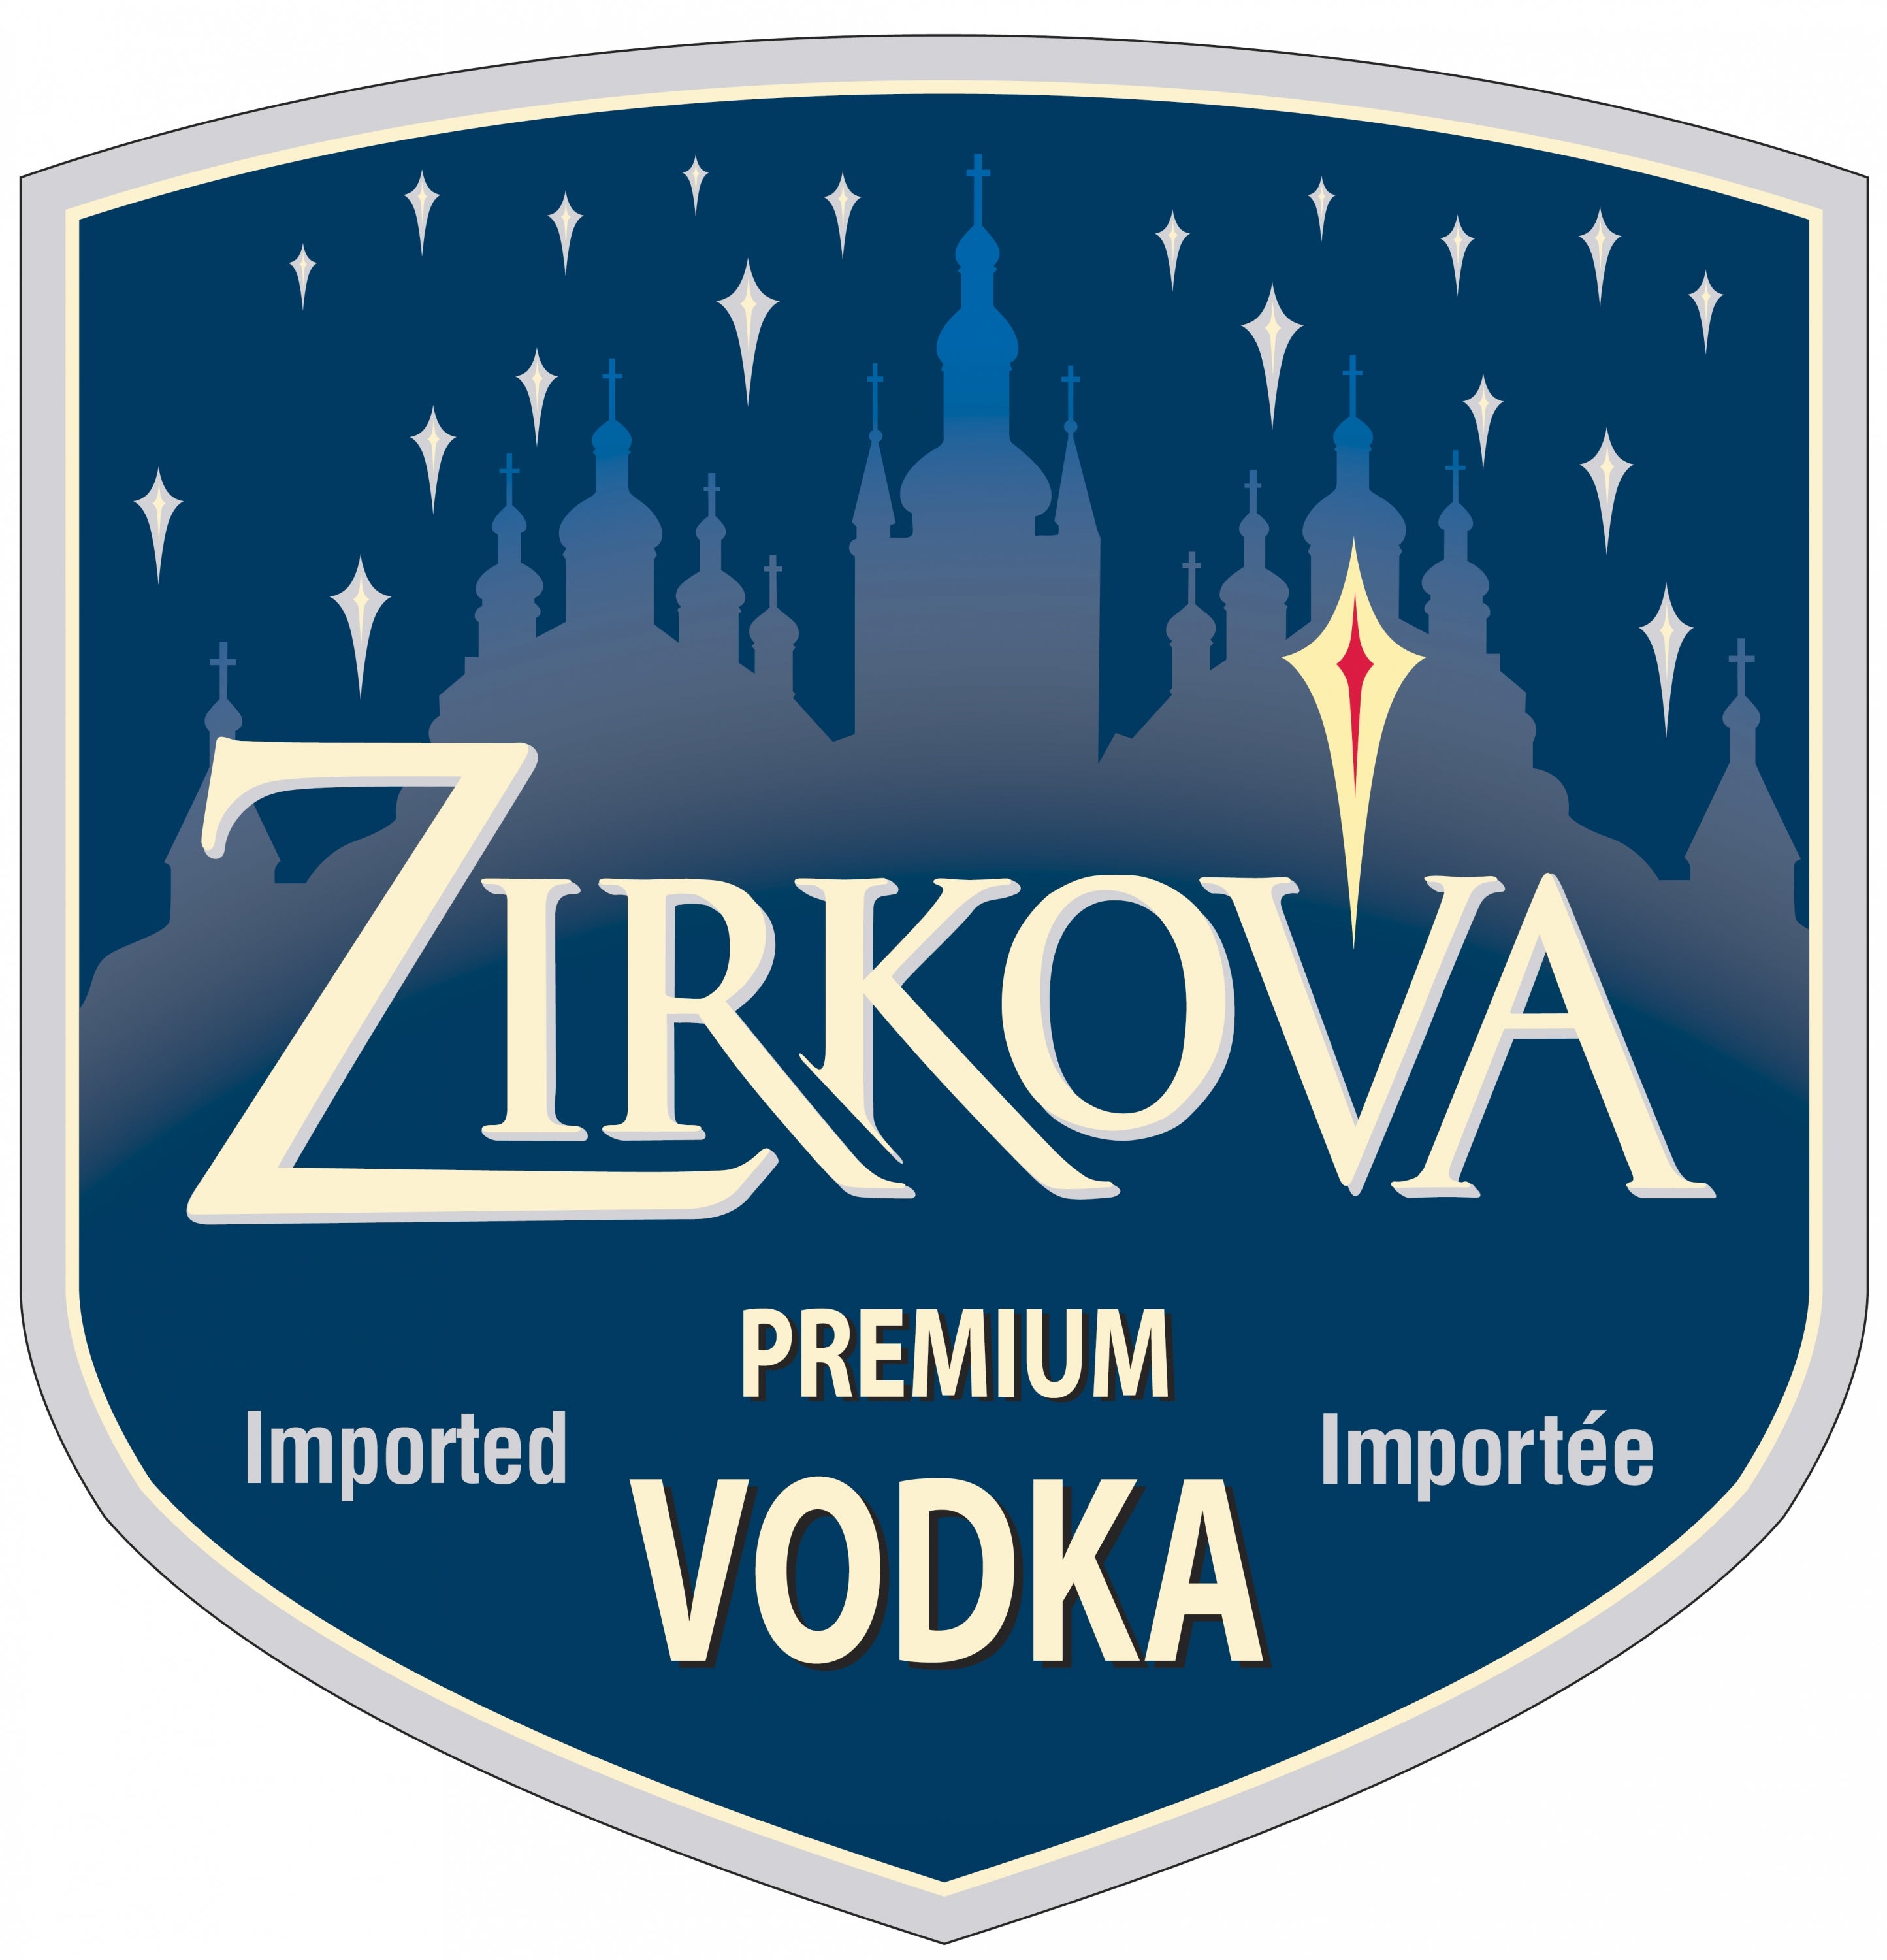 Zirkova Premium Vodak logo